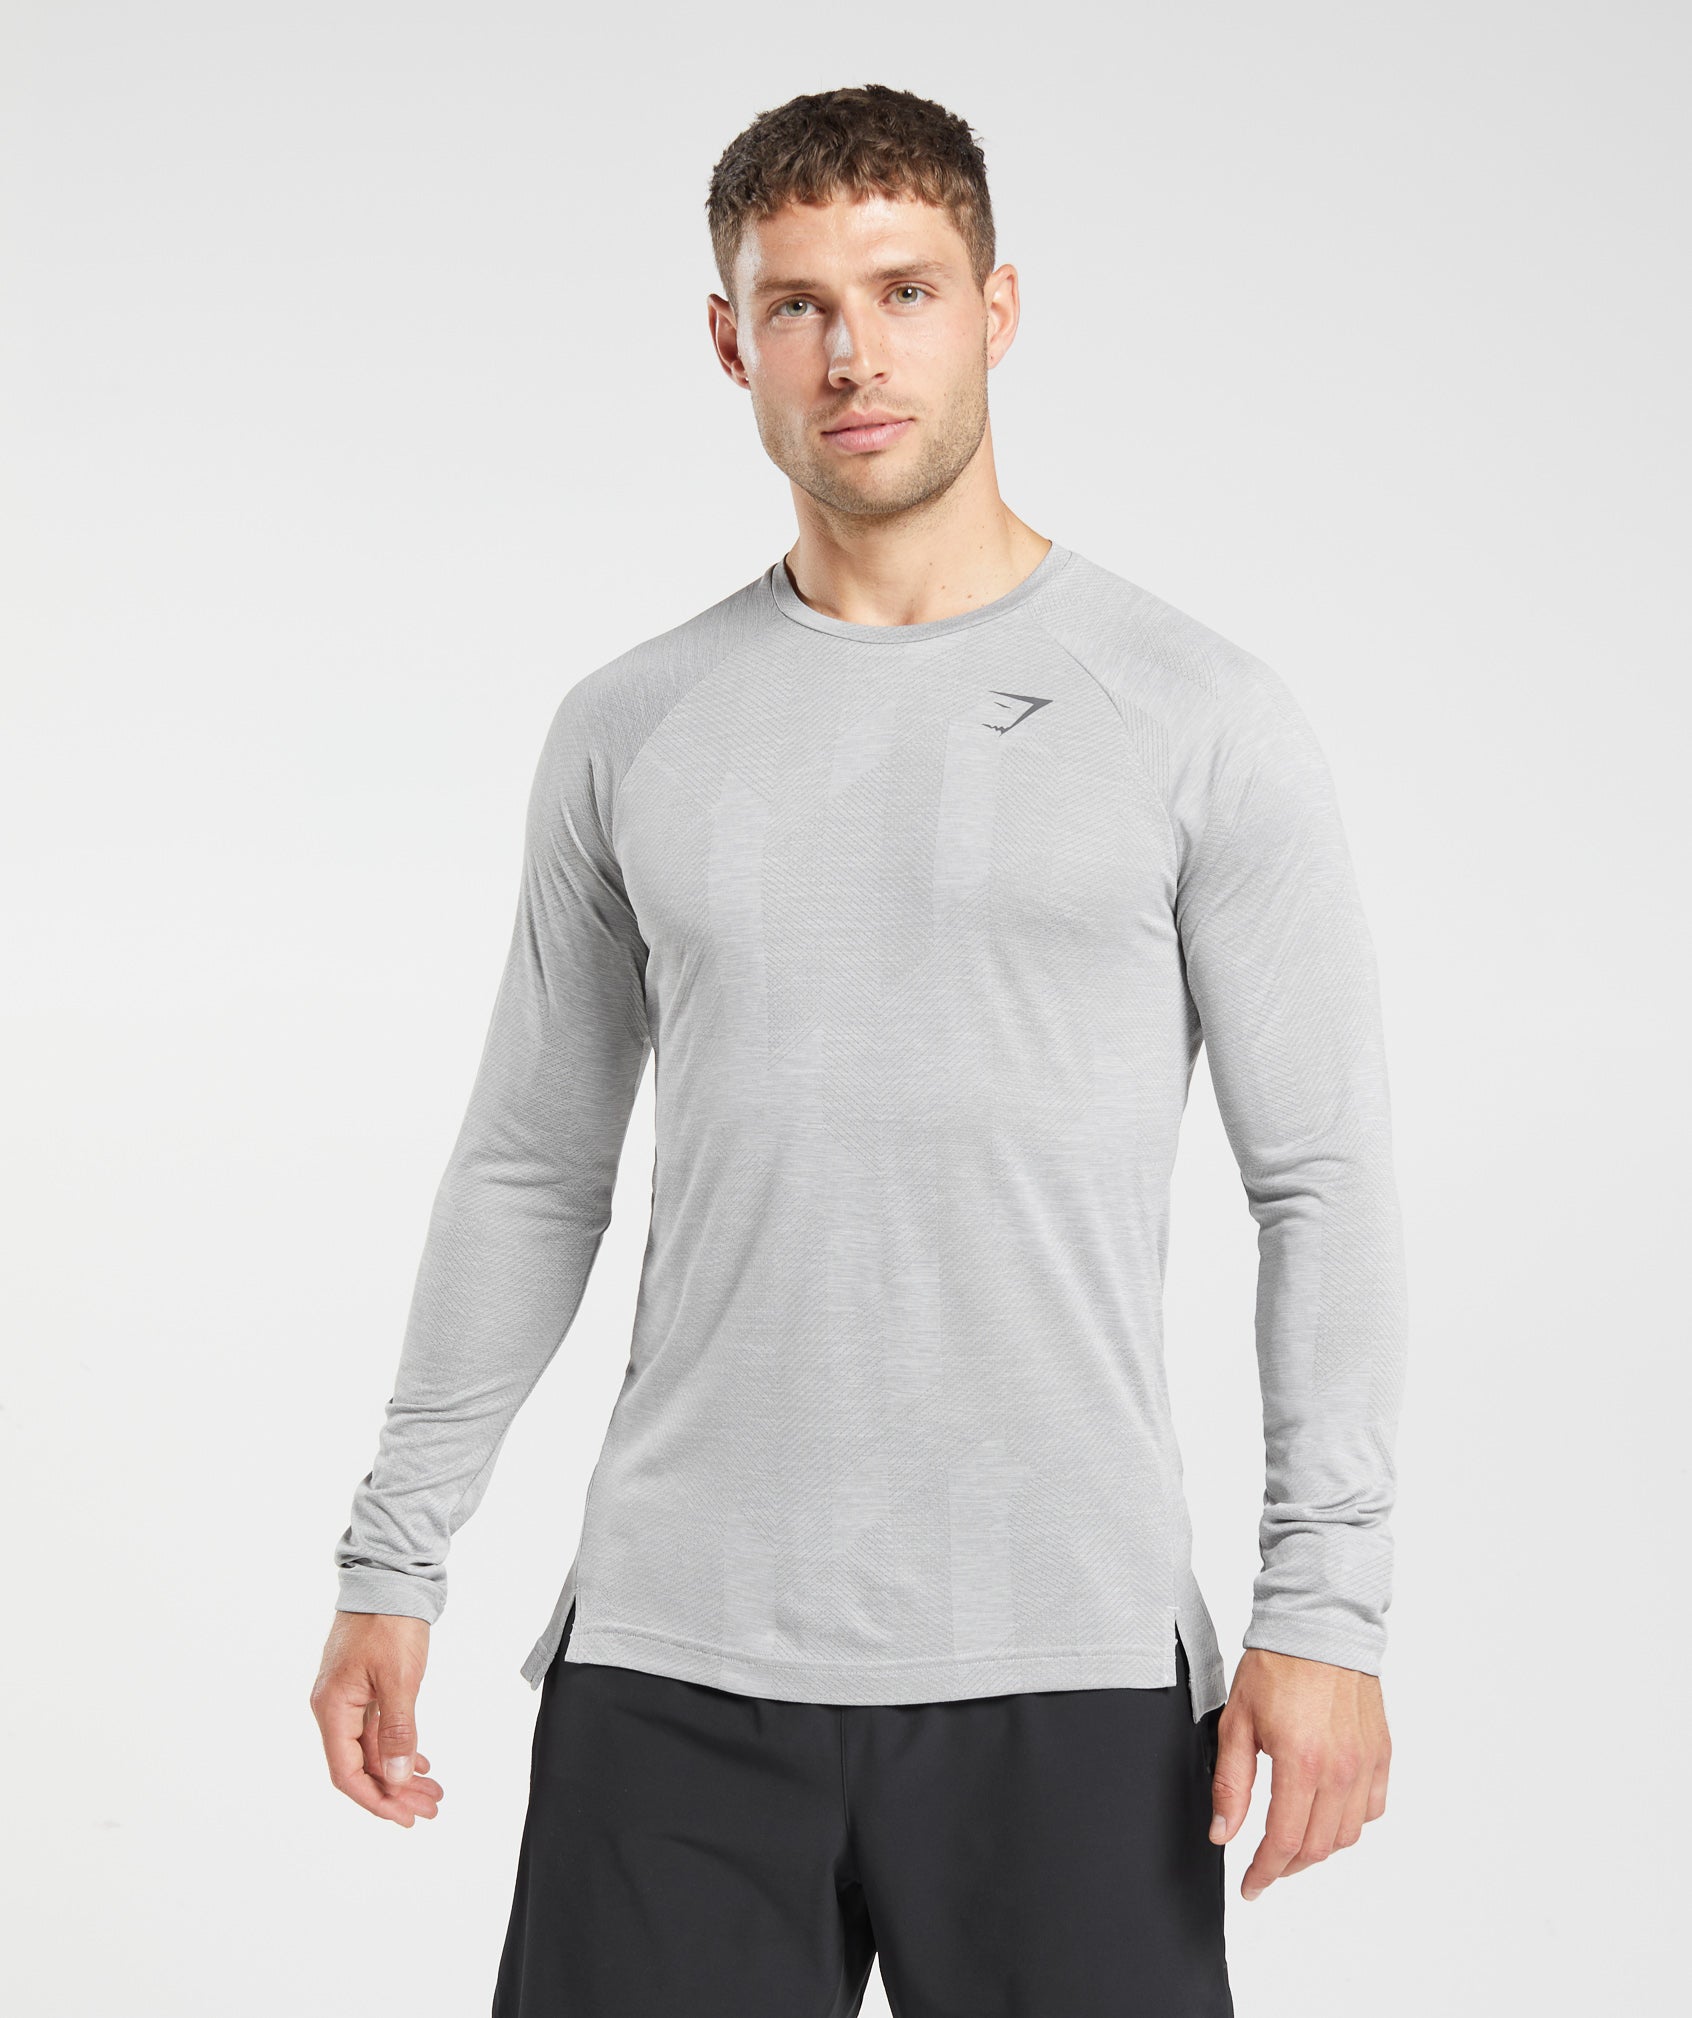 Apex Long Sleeve T-Shirt in Light Grey/Smokey Grey - view 1